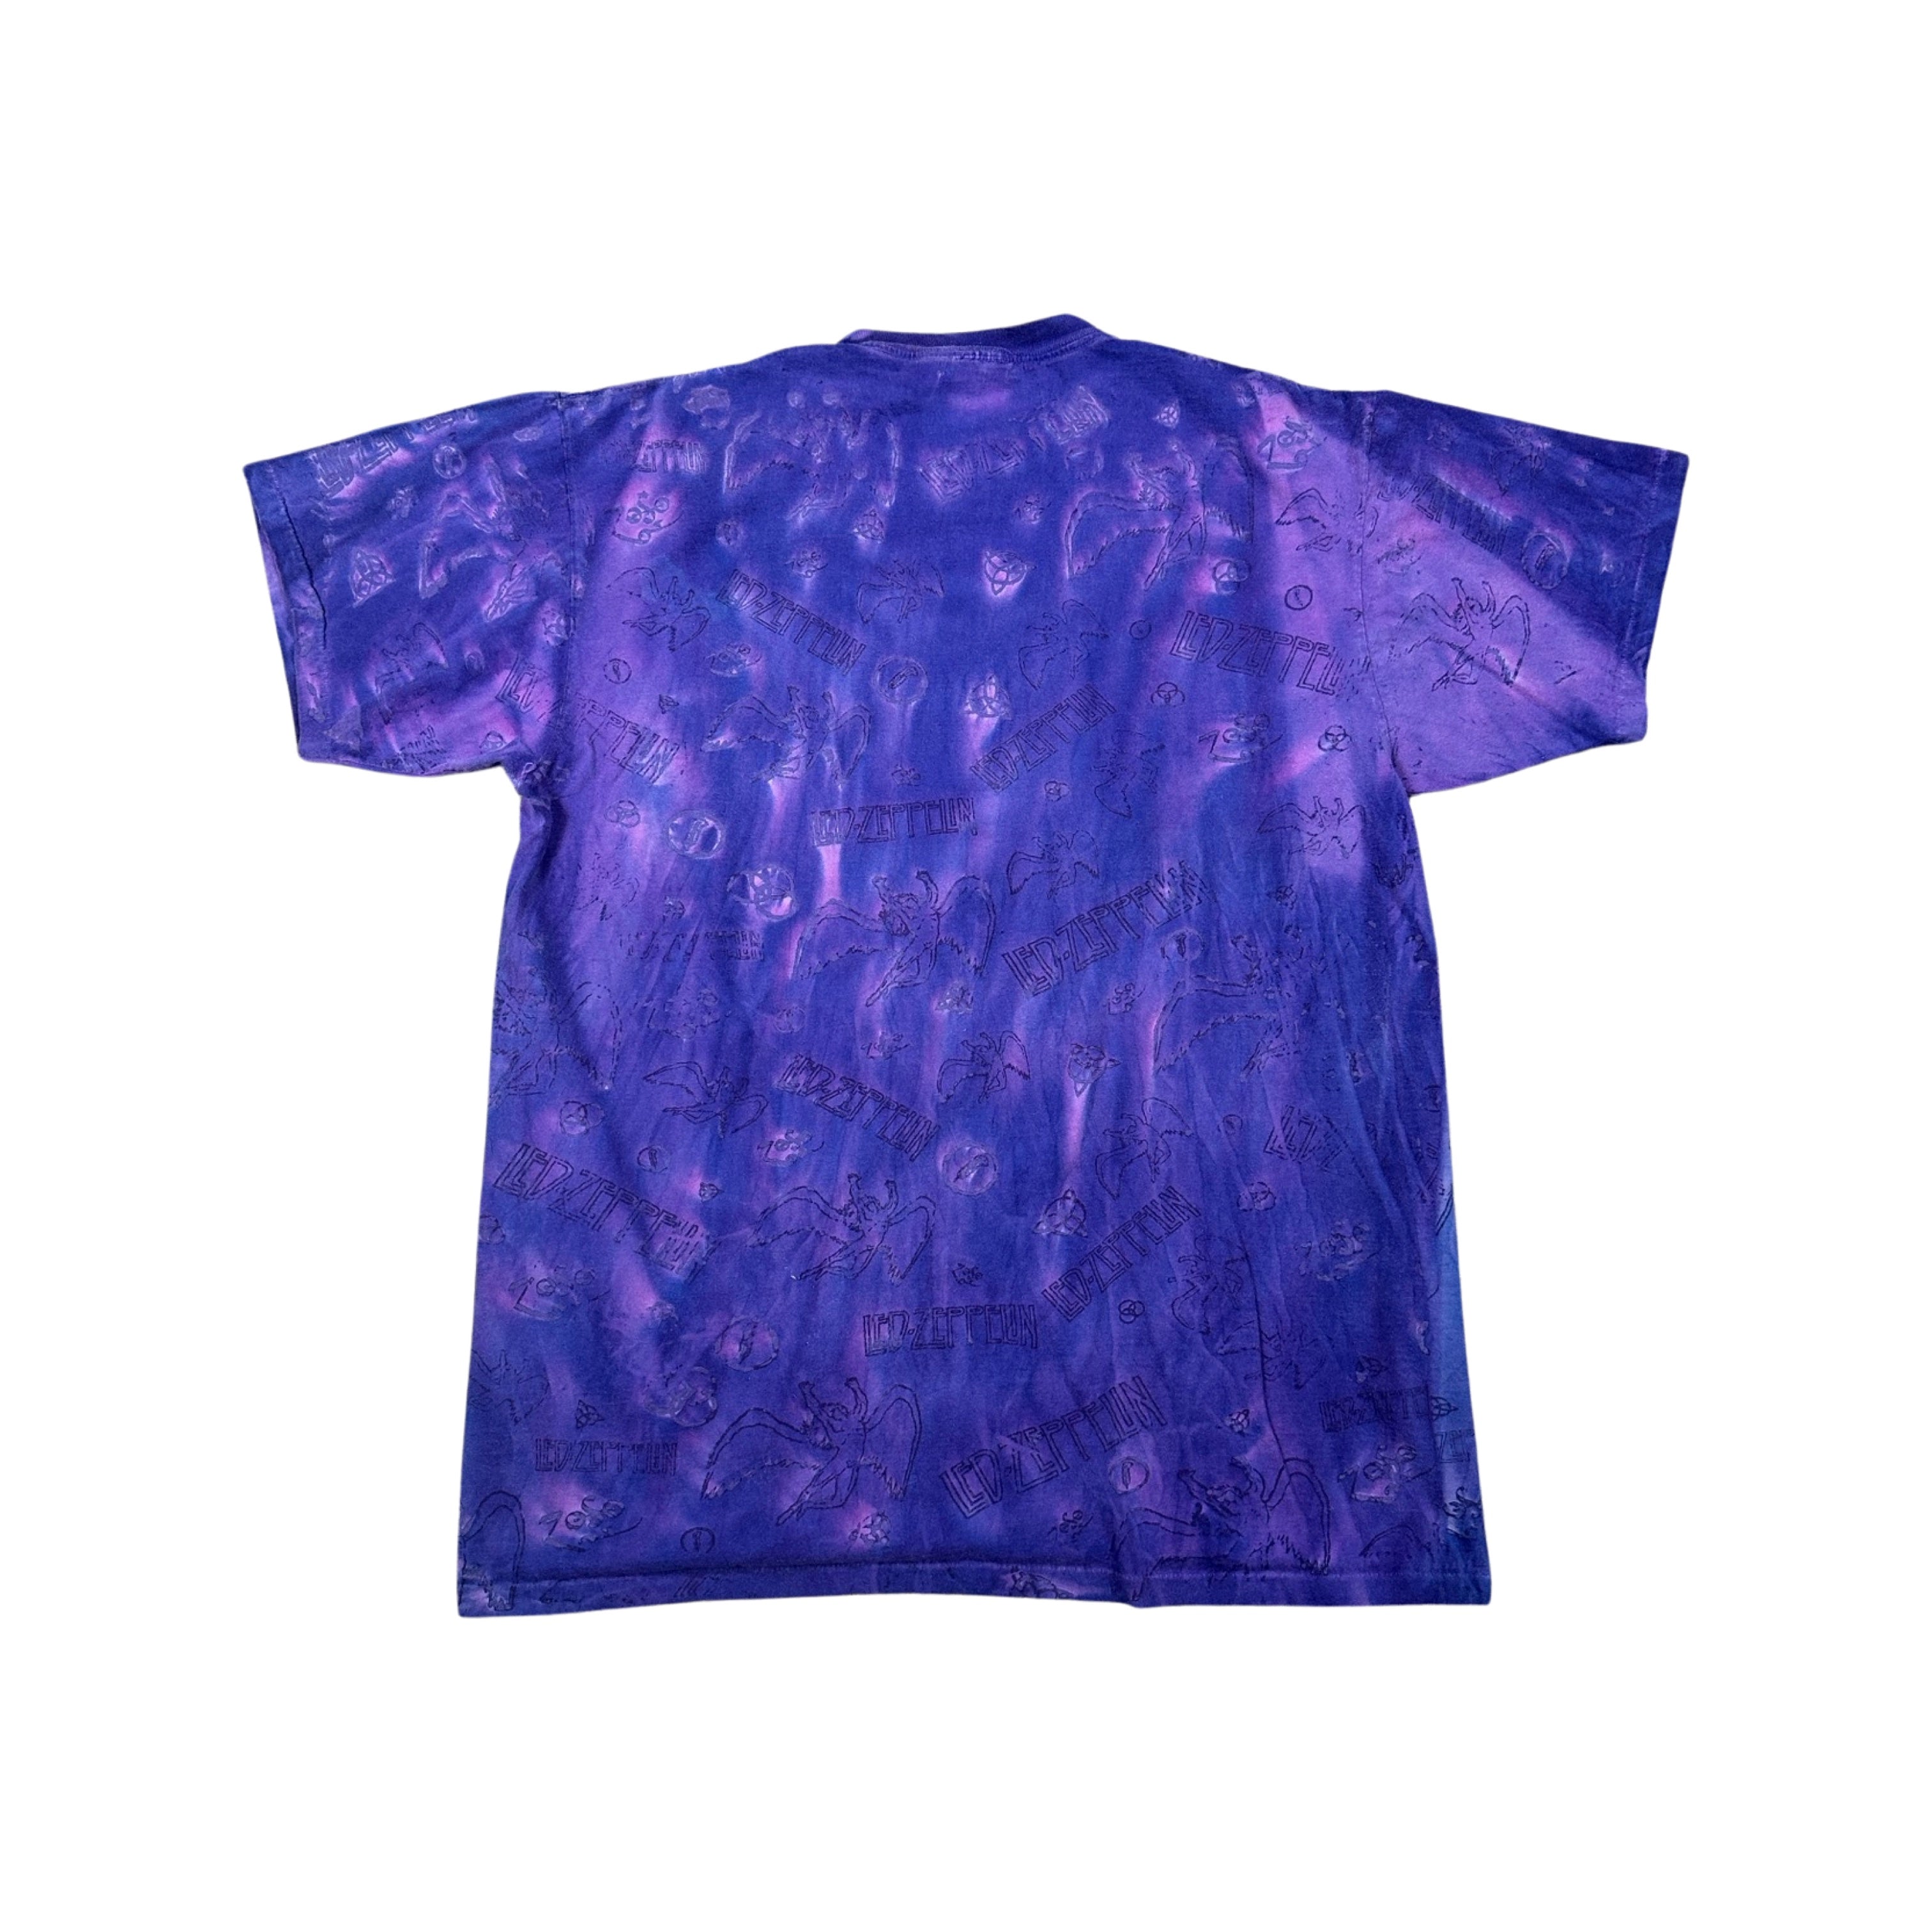 Purple Led Zeppelin All Over Print 90s T-Shirt Grail (XL)